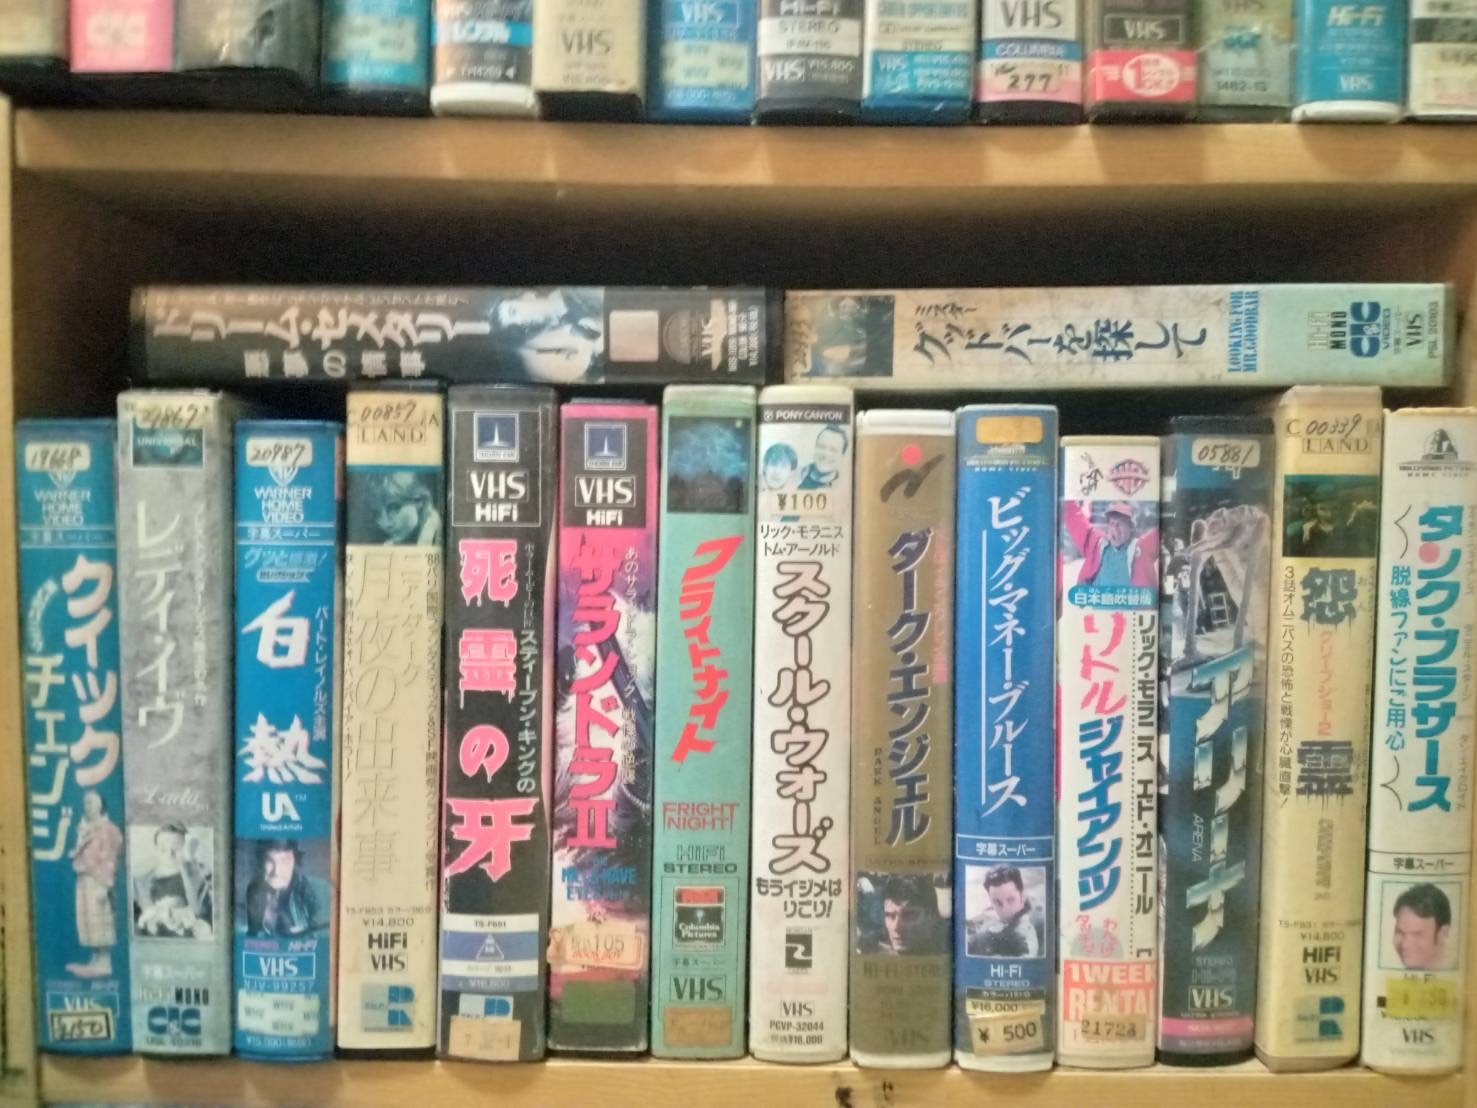 鎌田順也提供の自宅VHS棚写真